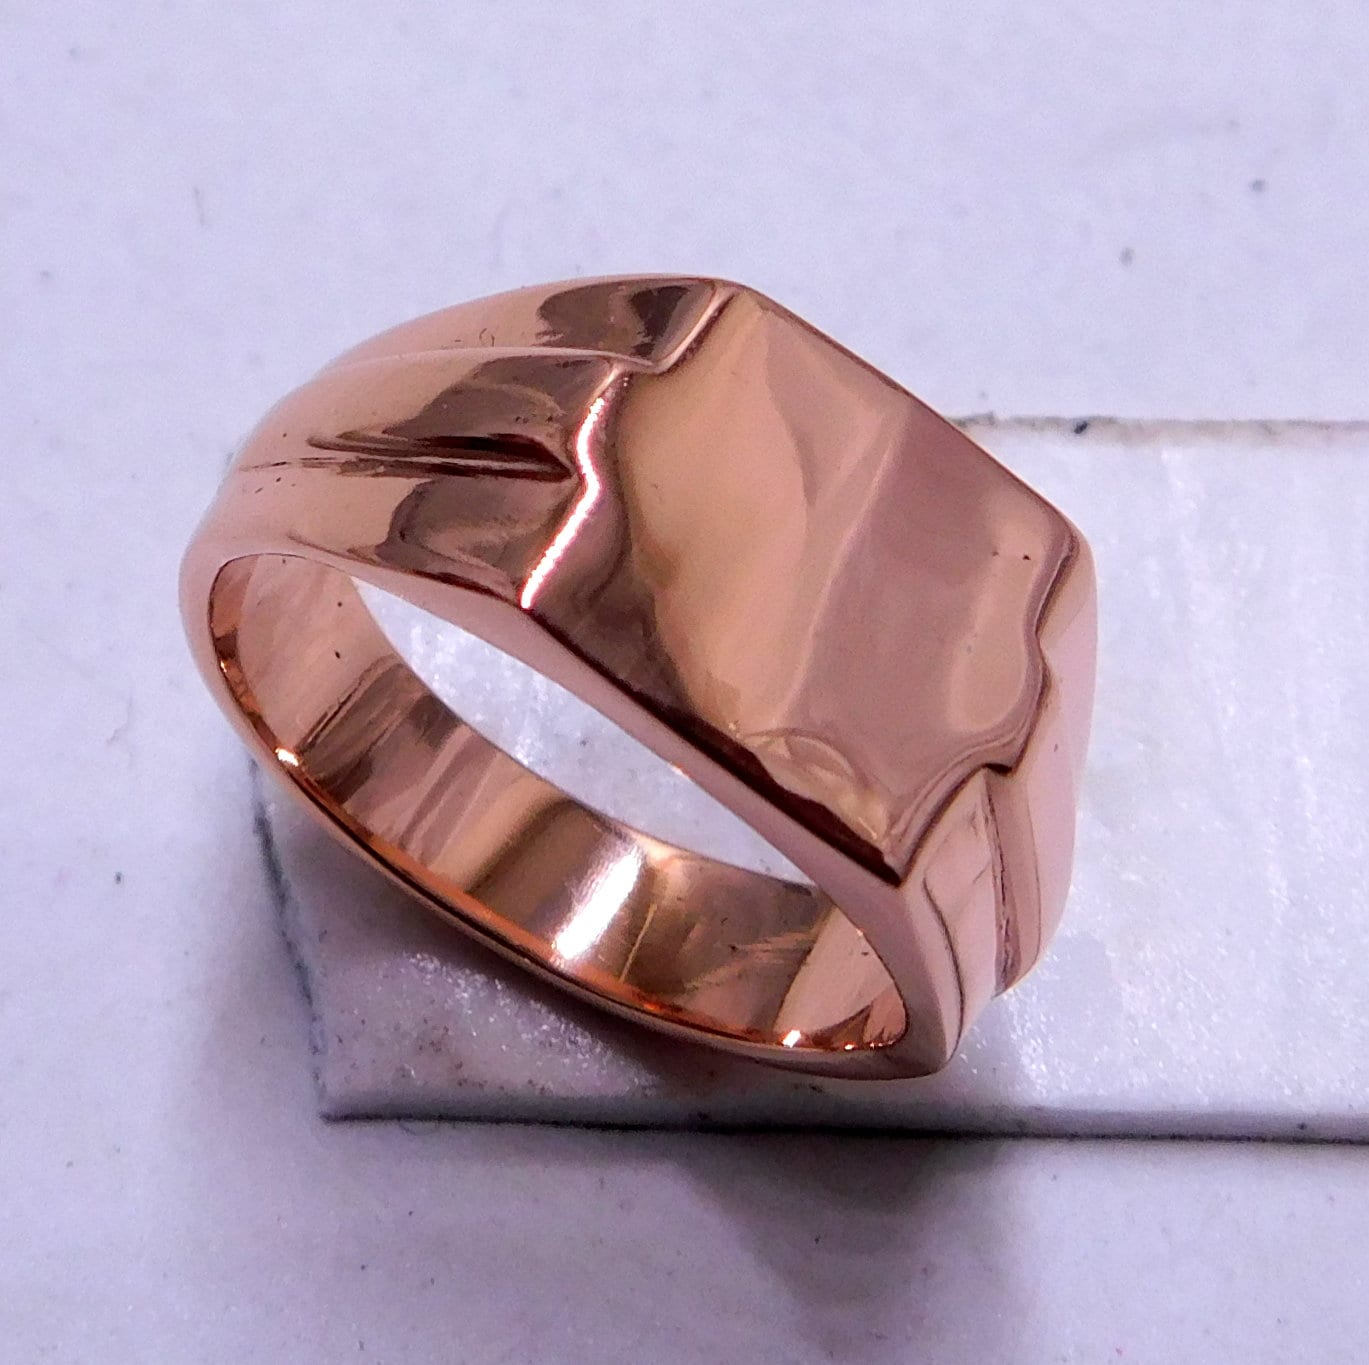 Details more than 151 copper ring for men best